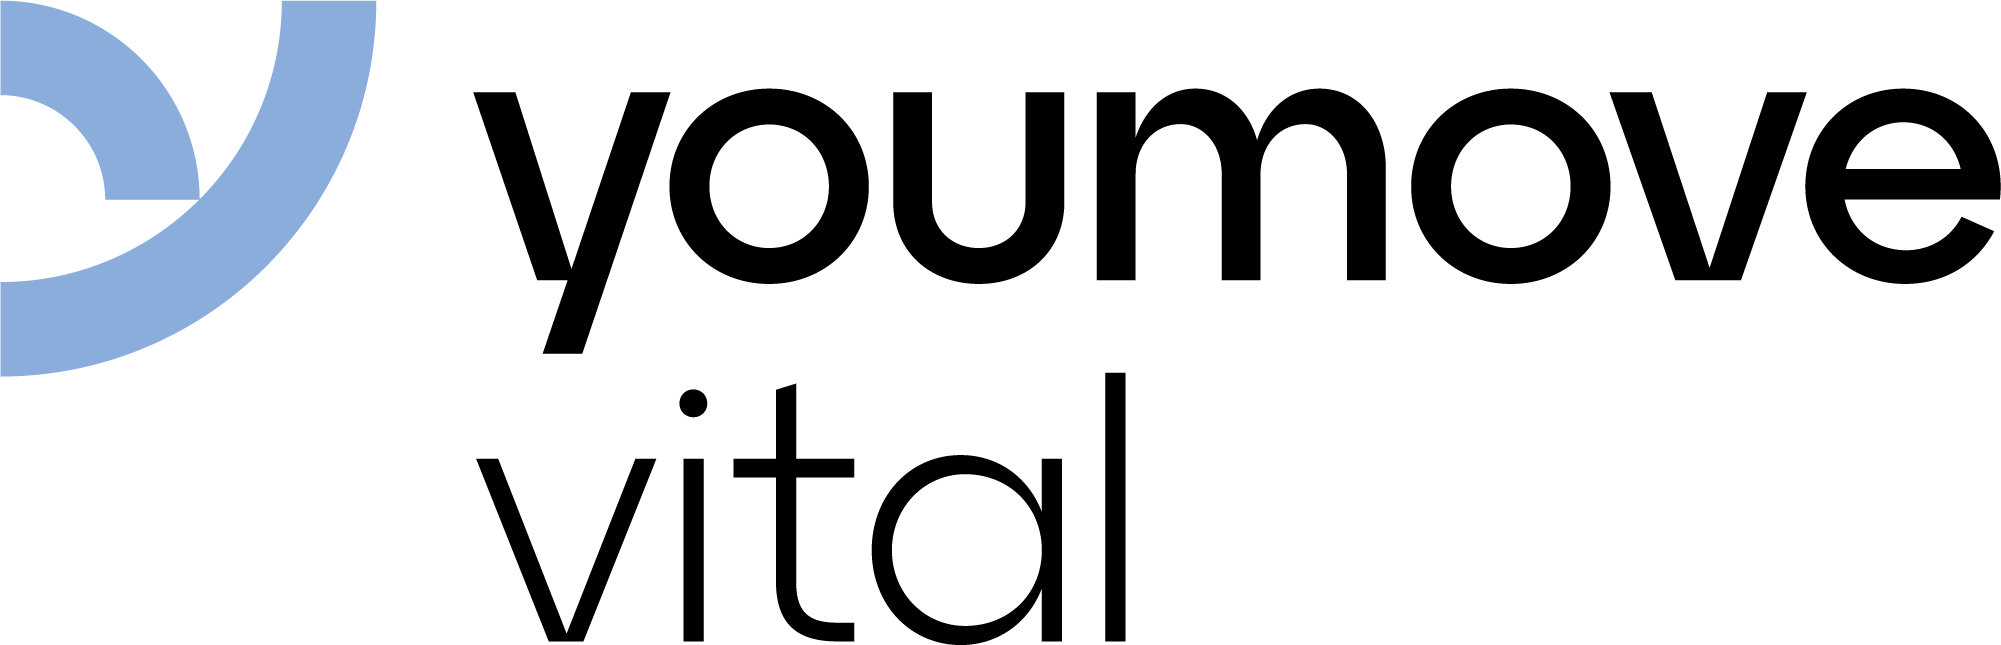 Logo youmove vital